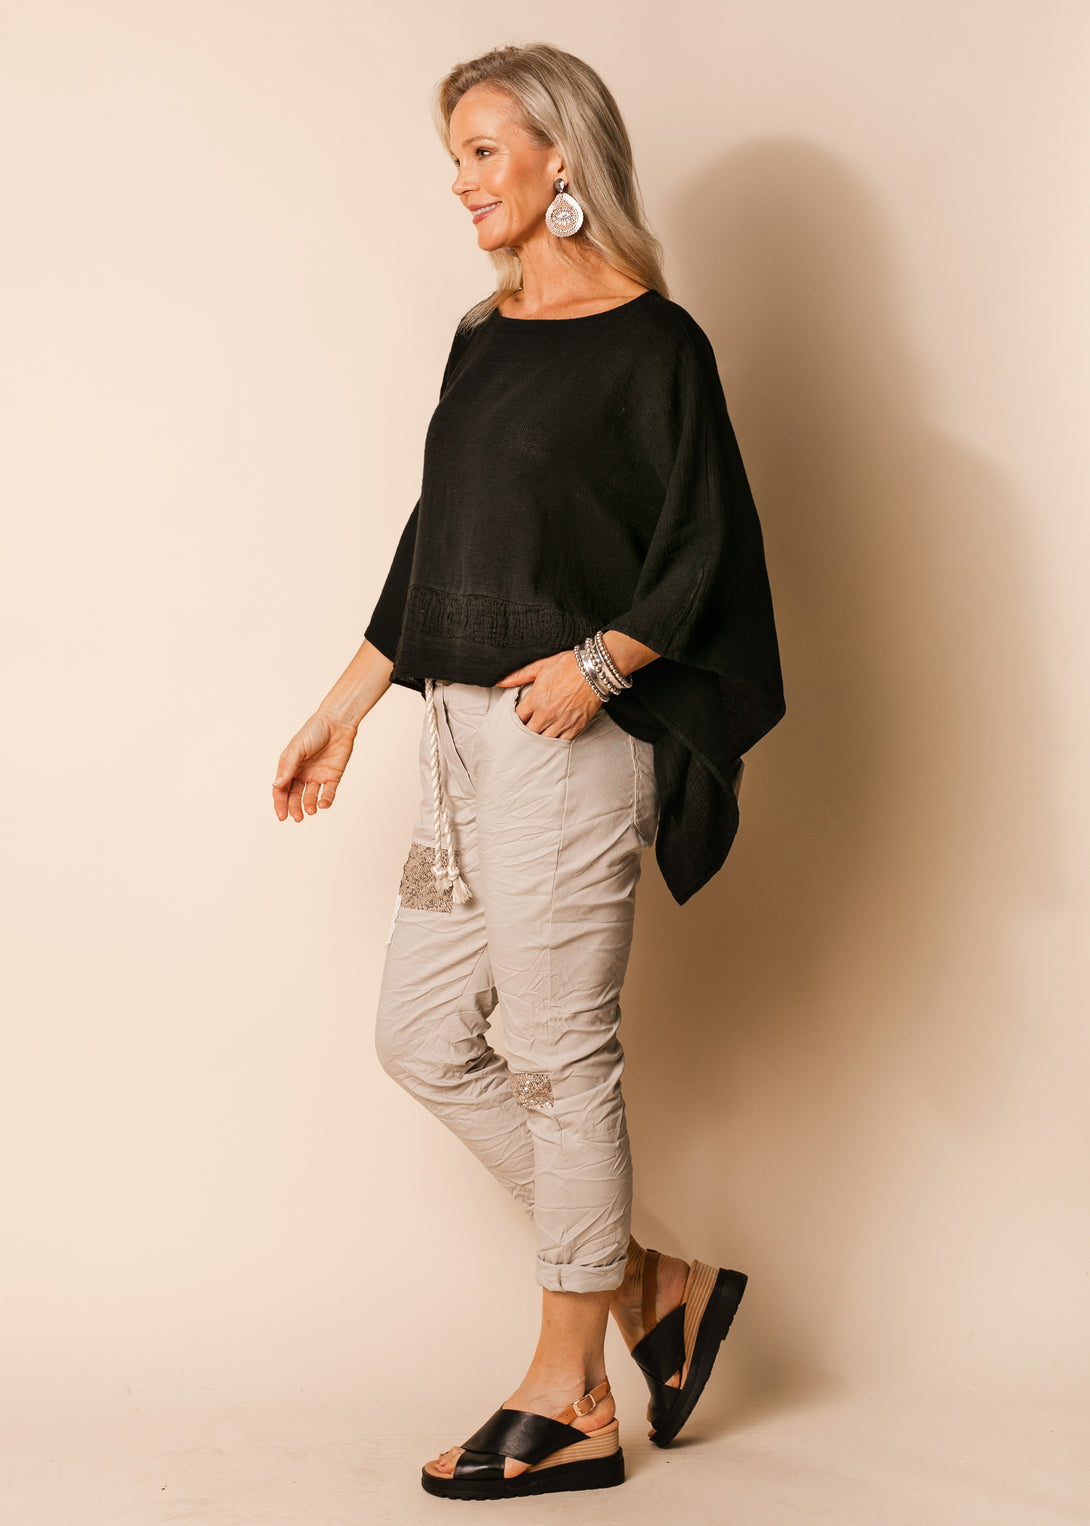 Bria Linen Blend Top in Onyx - Imagine Fashion